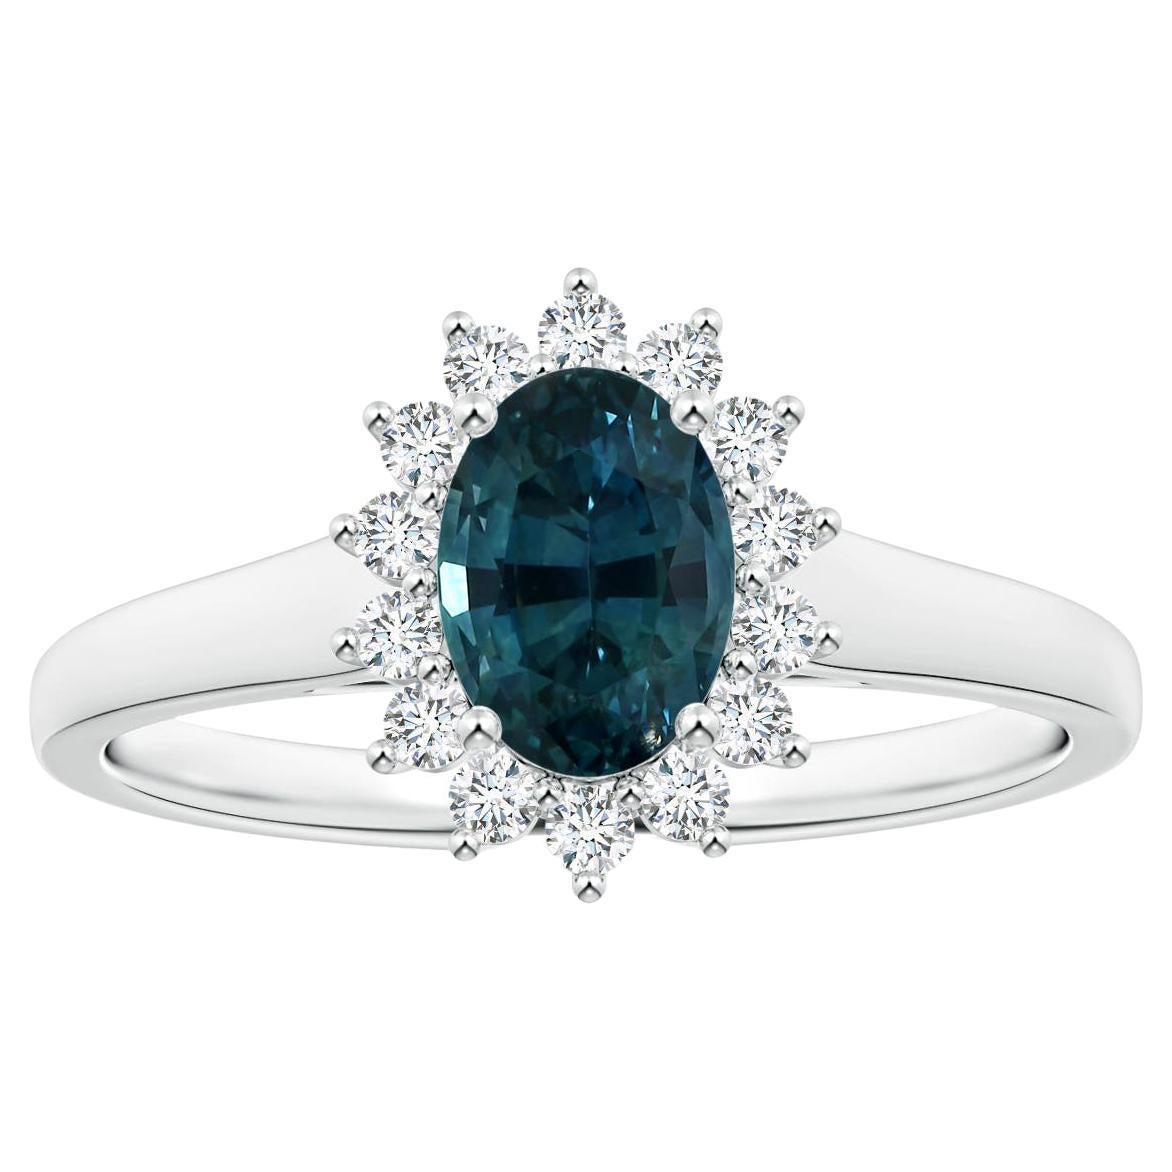 ANGARA Princess Diana Inspired GIA Certified Teal Sapphire Halo Ring in Platinum